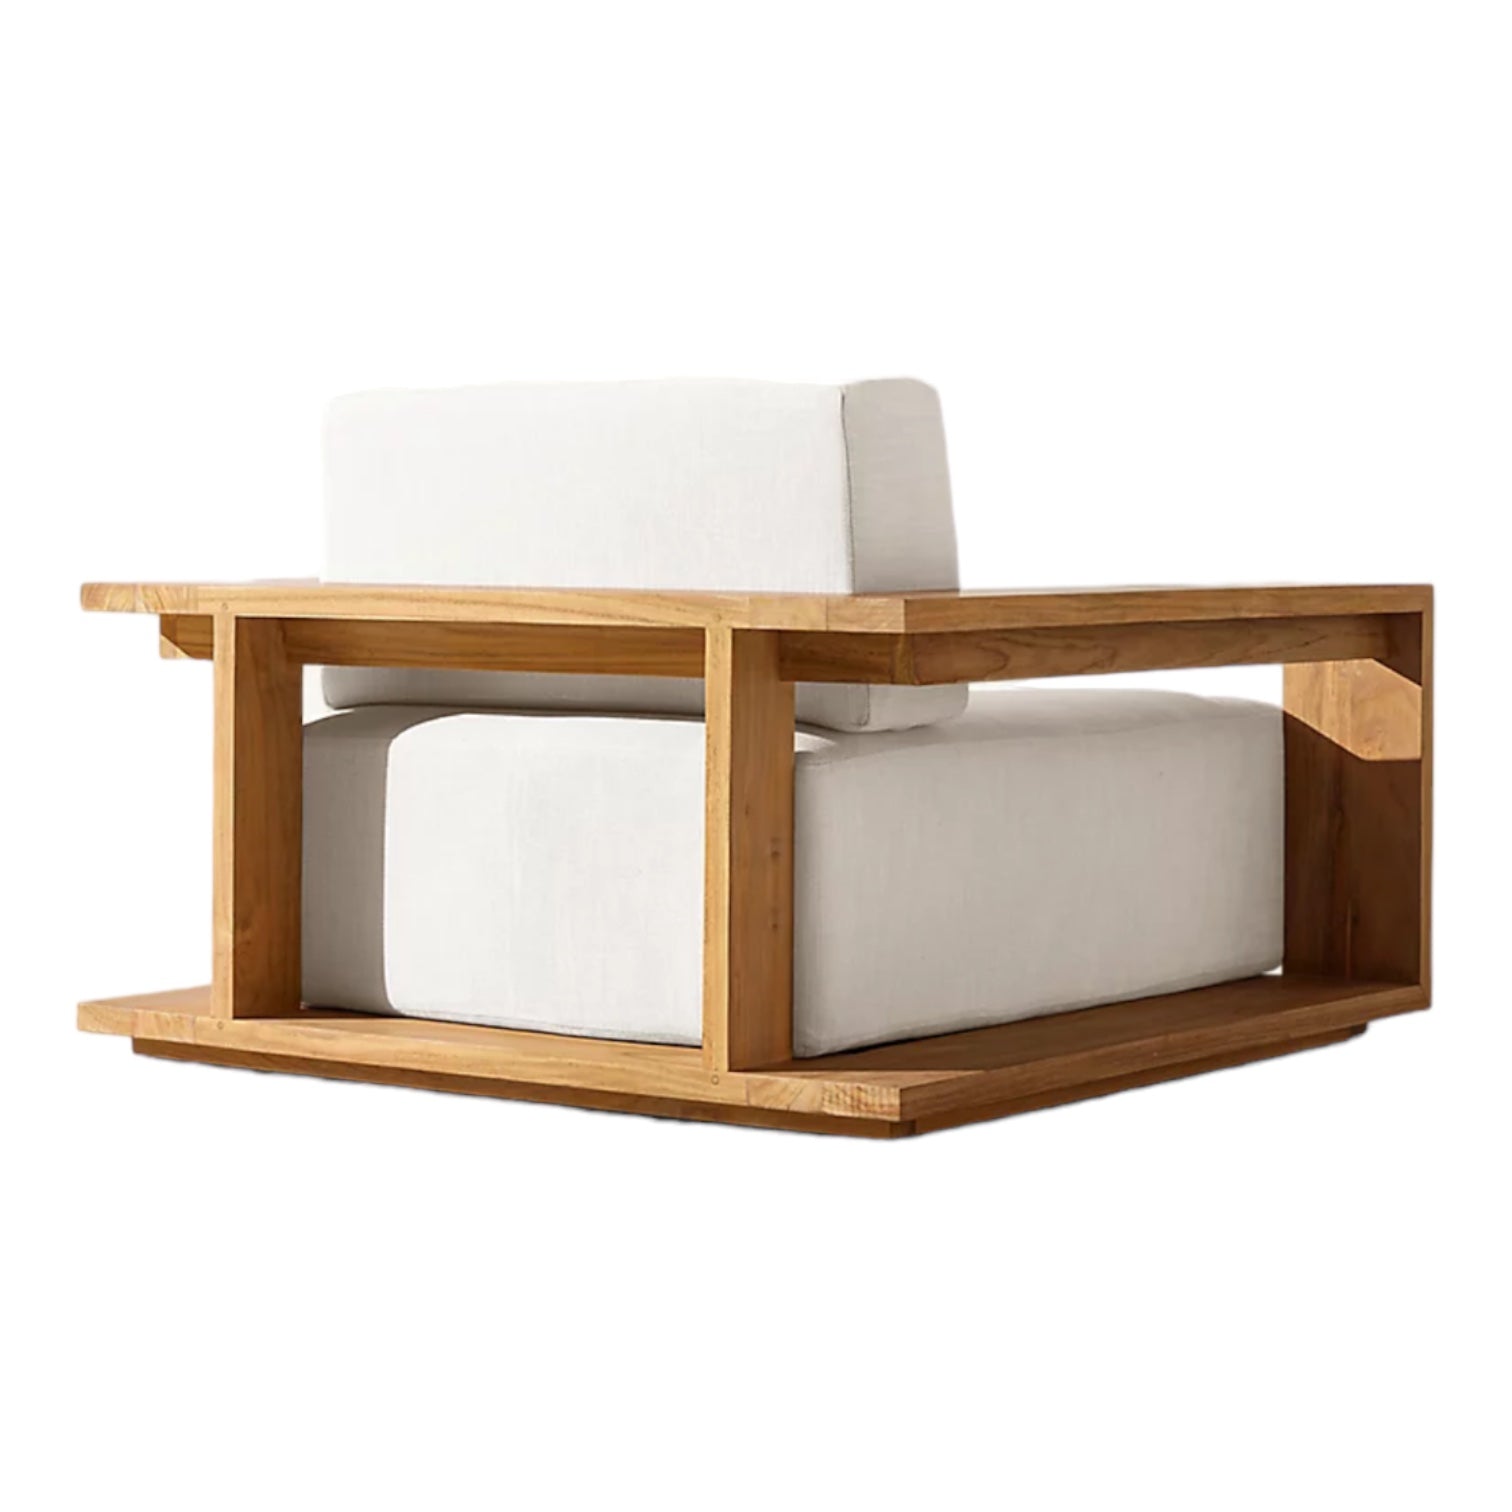 Luxury Teak “Oslo” Outdoor Lounge Chair